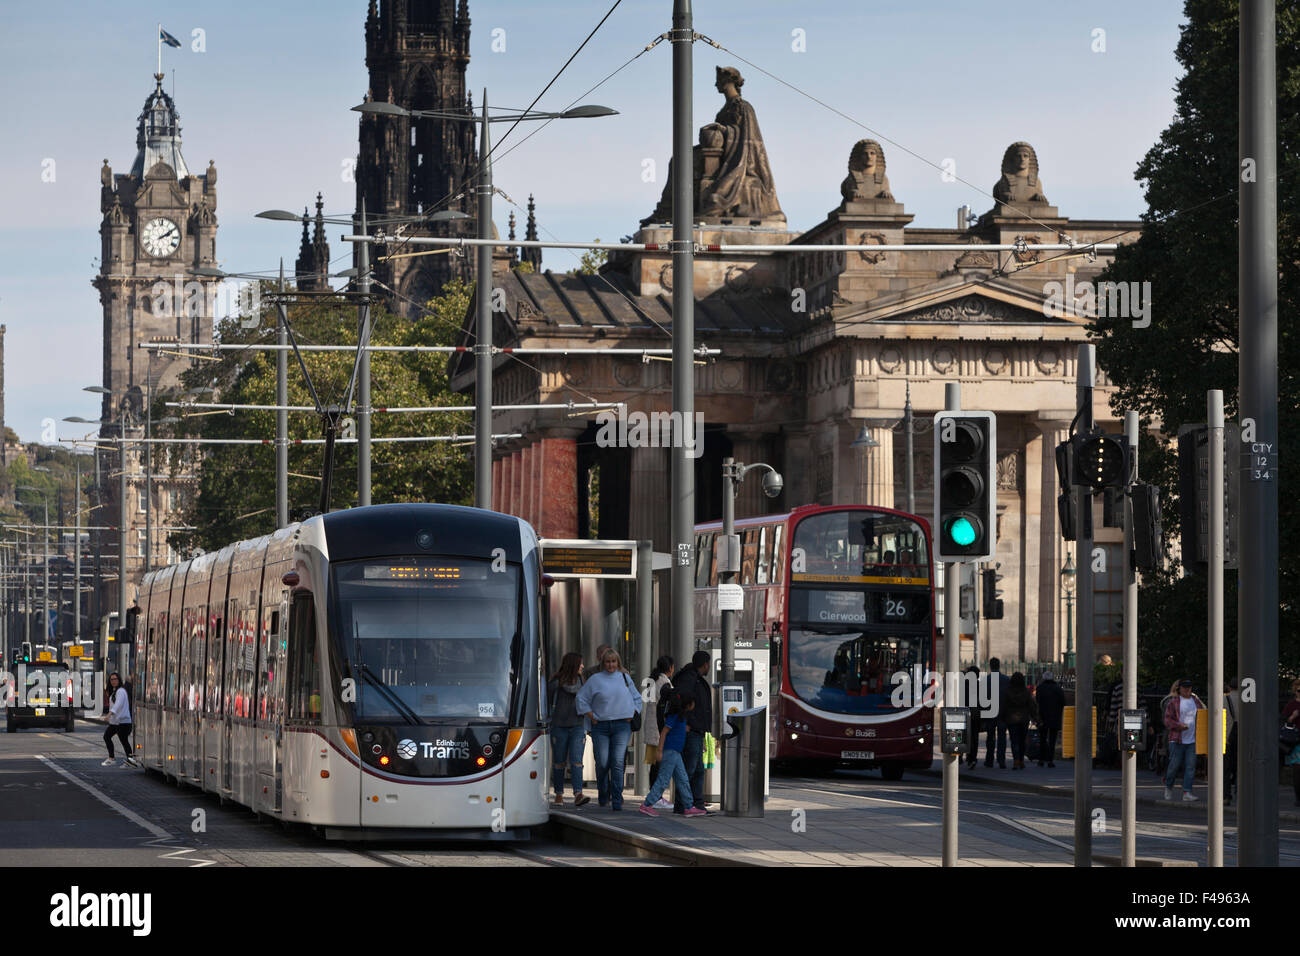 Edinburgh tram on Princes Street, with National Gallery and the Scott Monument in background. Edinburgh, Scotland. Stock Photo